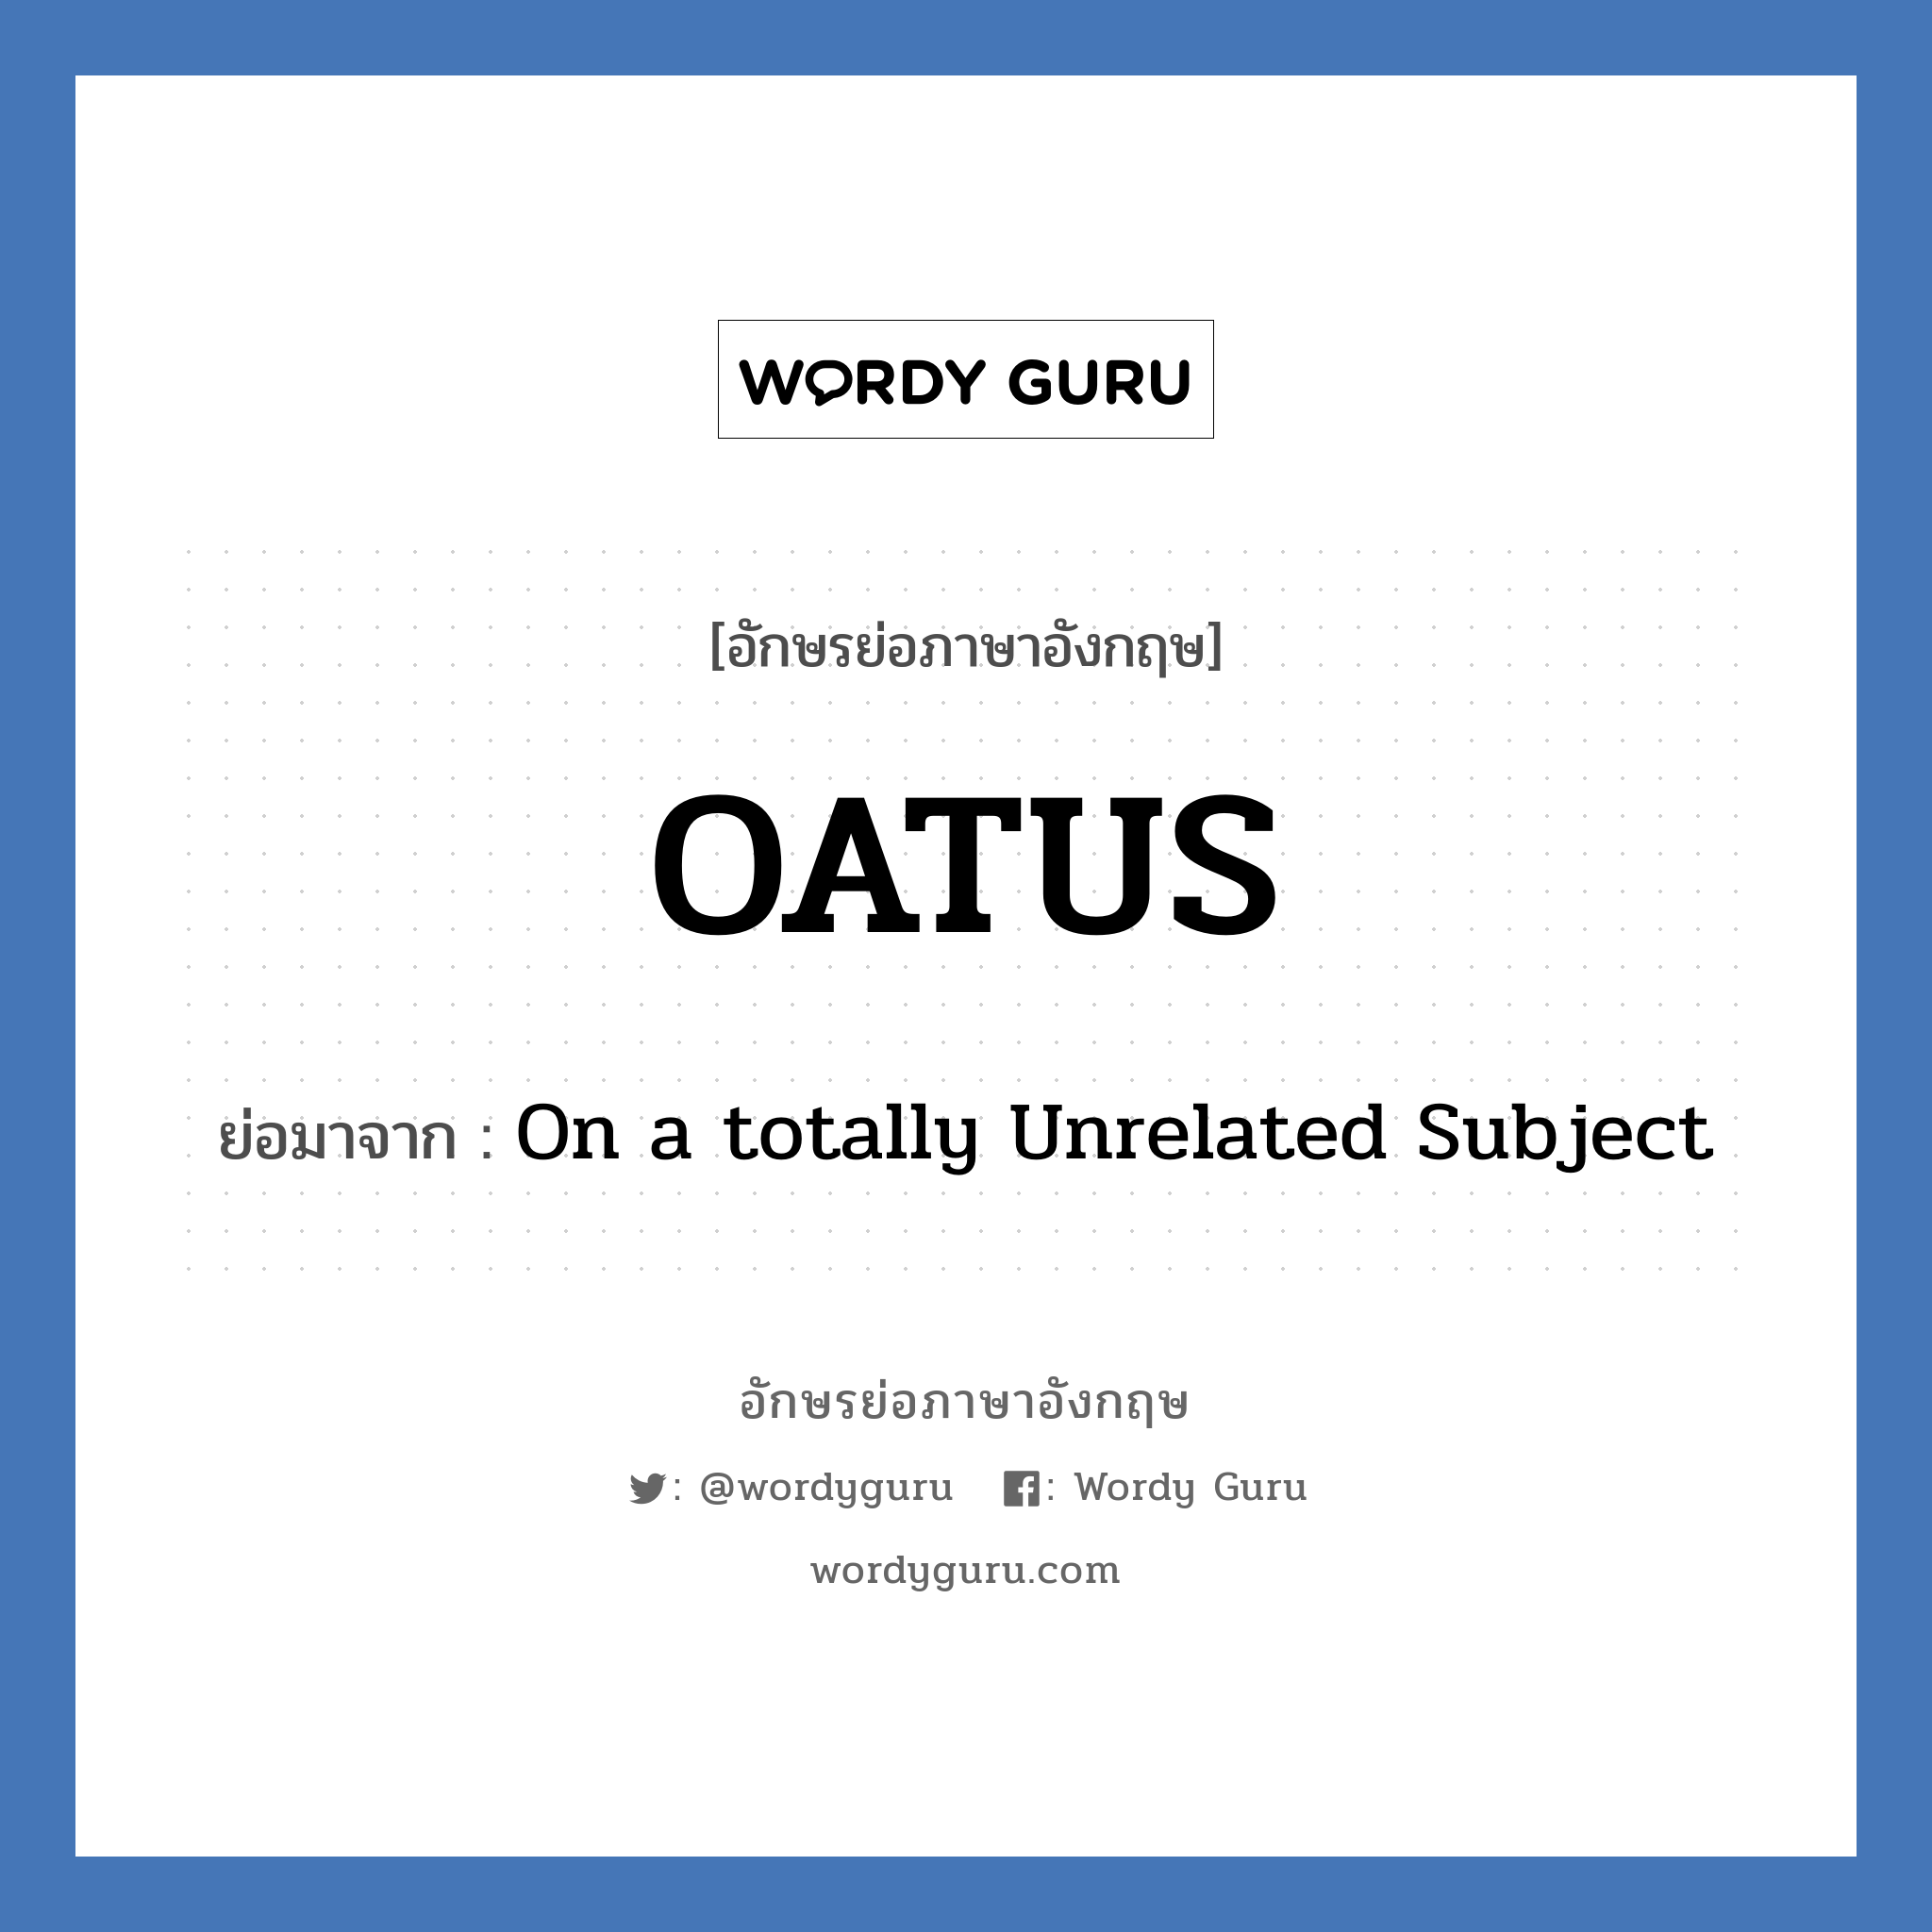 On a totally Unrelated Subject คำย่อคือ? แปลว่า?, อักษรย่อภาษาอังกฤษ On a totally Unrelated Subject ย่อมาจาก OATUS